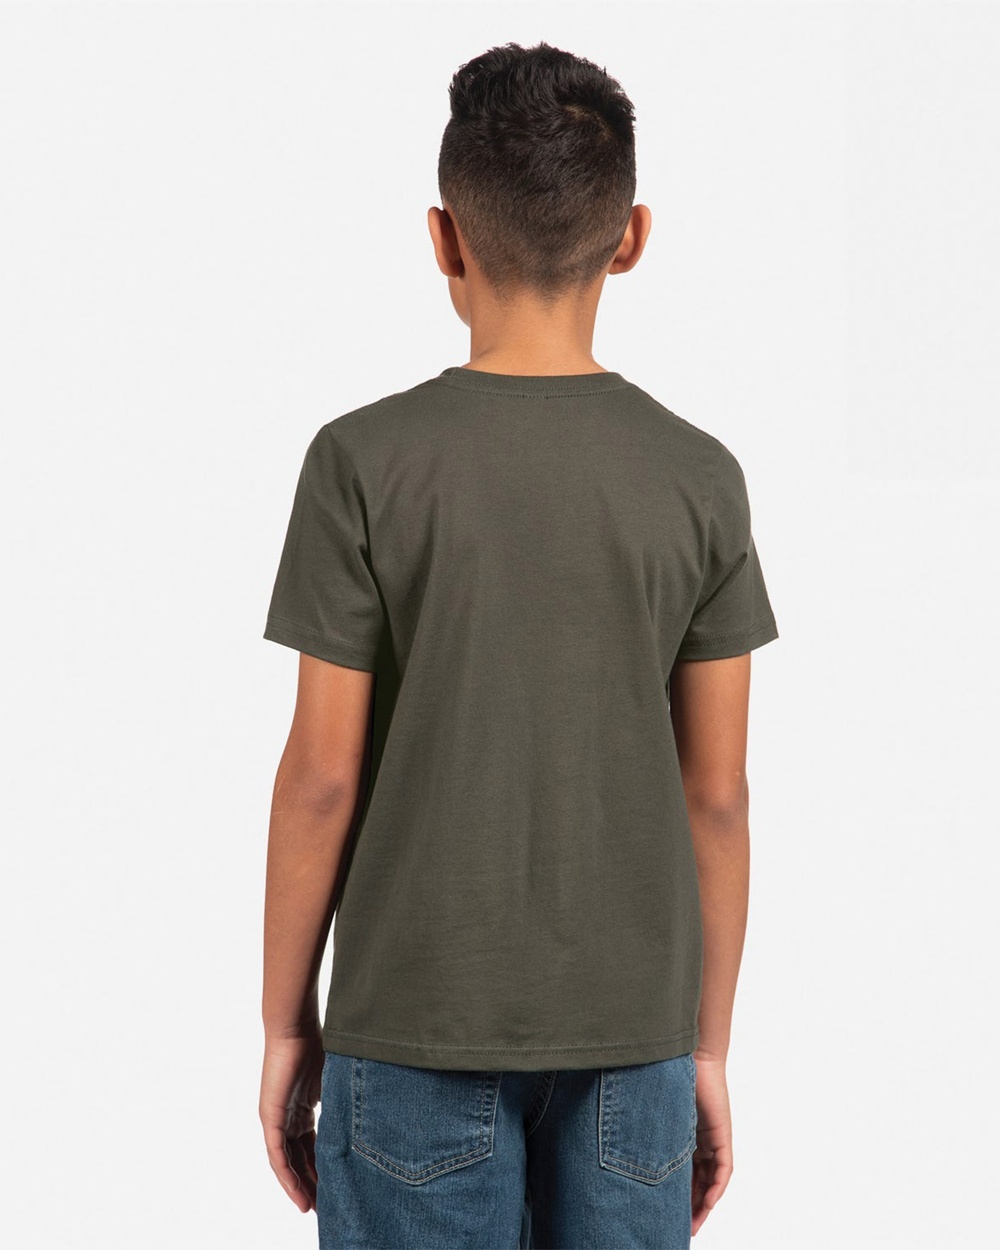 Next Level Apparel® 3310 Youth Cotton T-Shirt - Wholesale Apparel